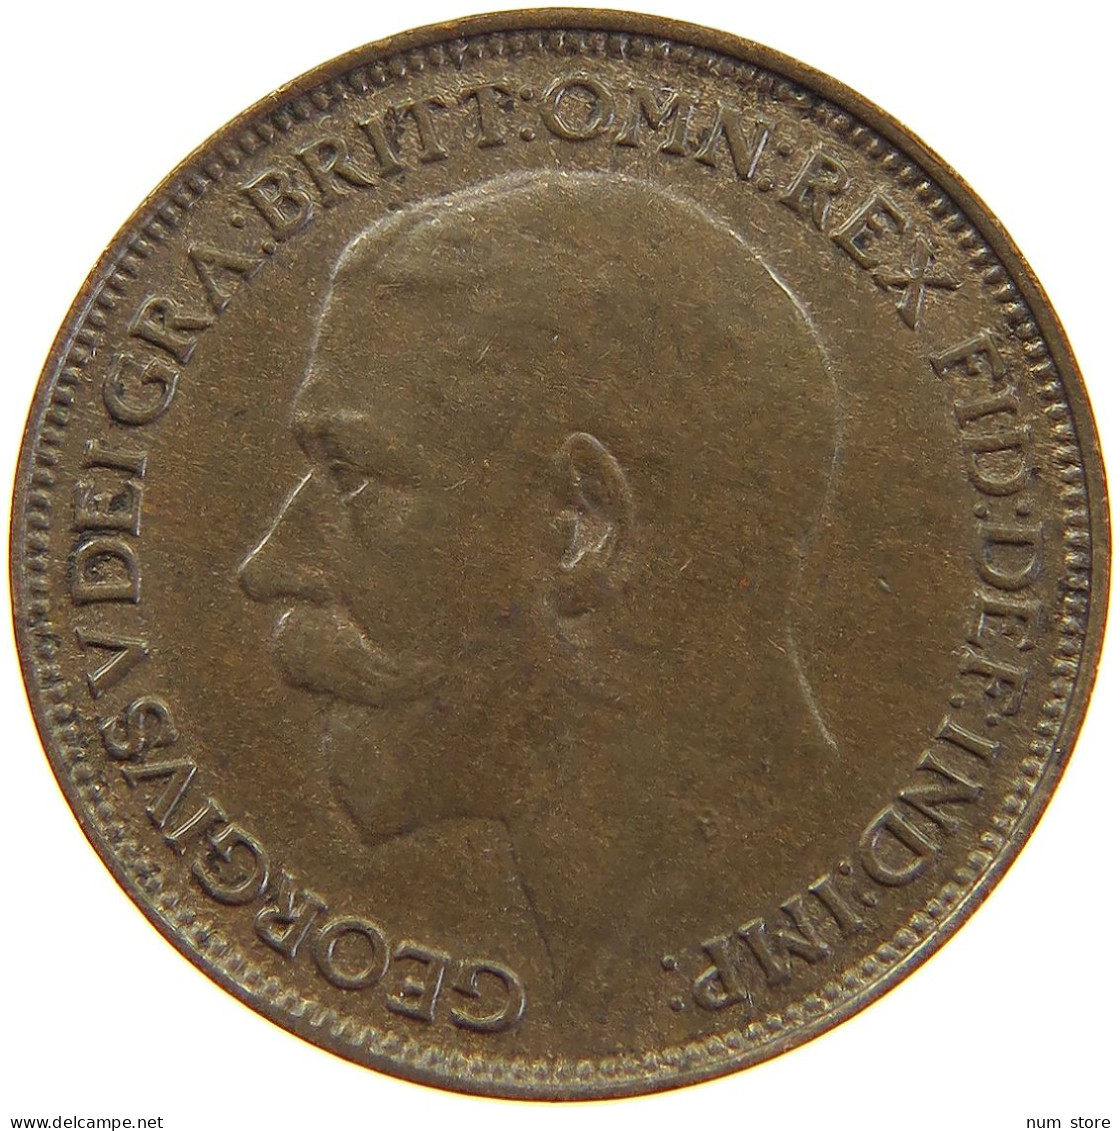 GREAT BRITAIN FARTHING 1925 George V. (1910-1936) #a011 1051 - B. 1 Farthing